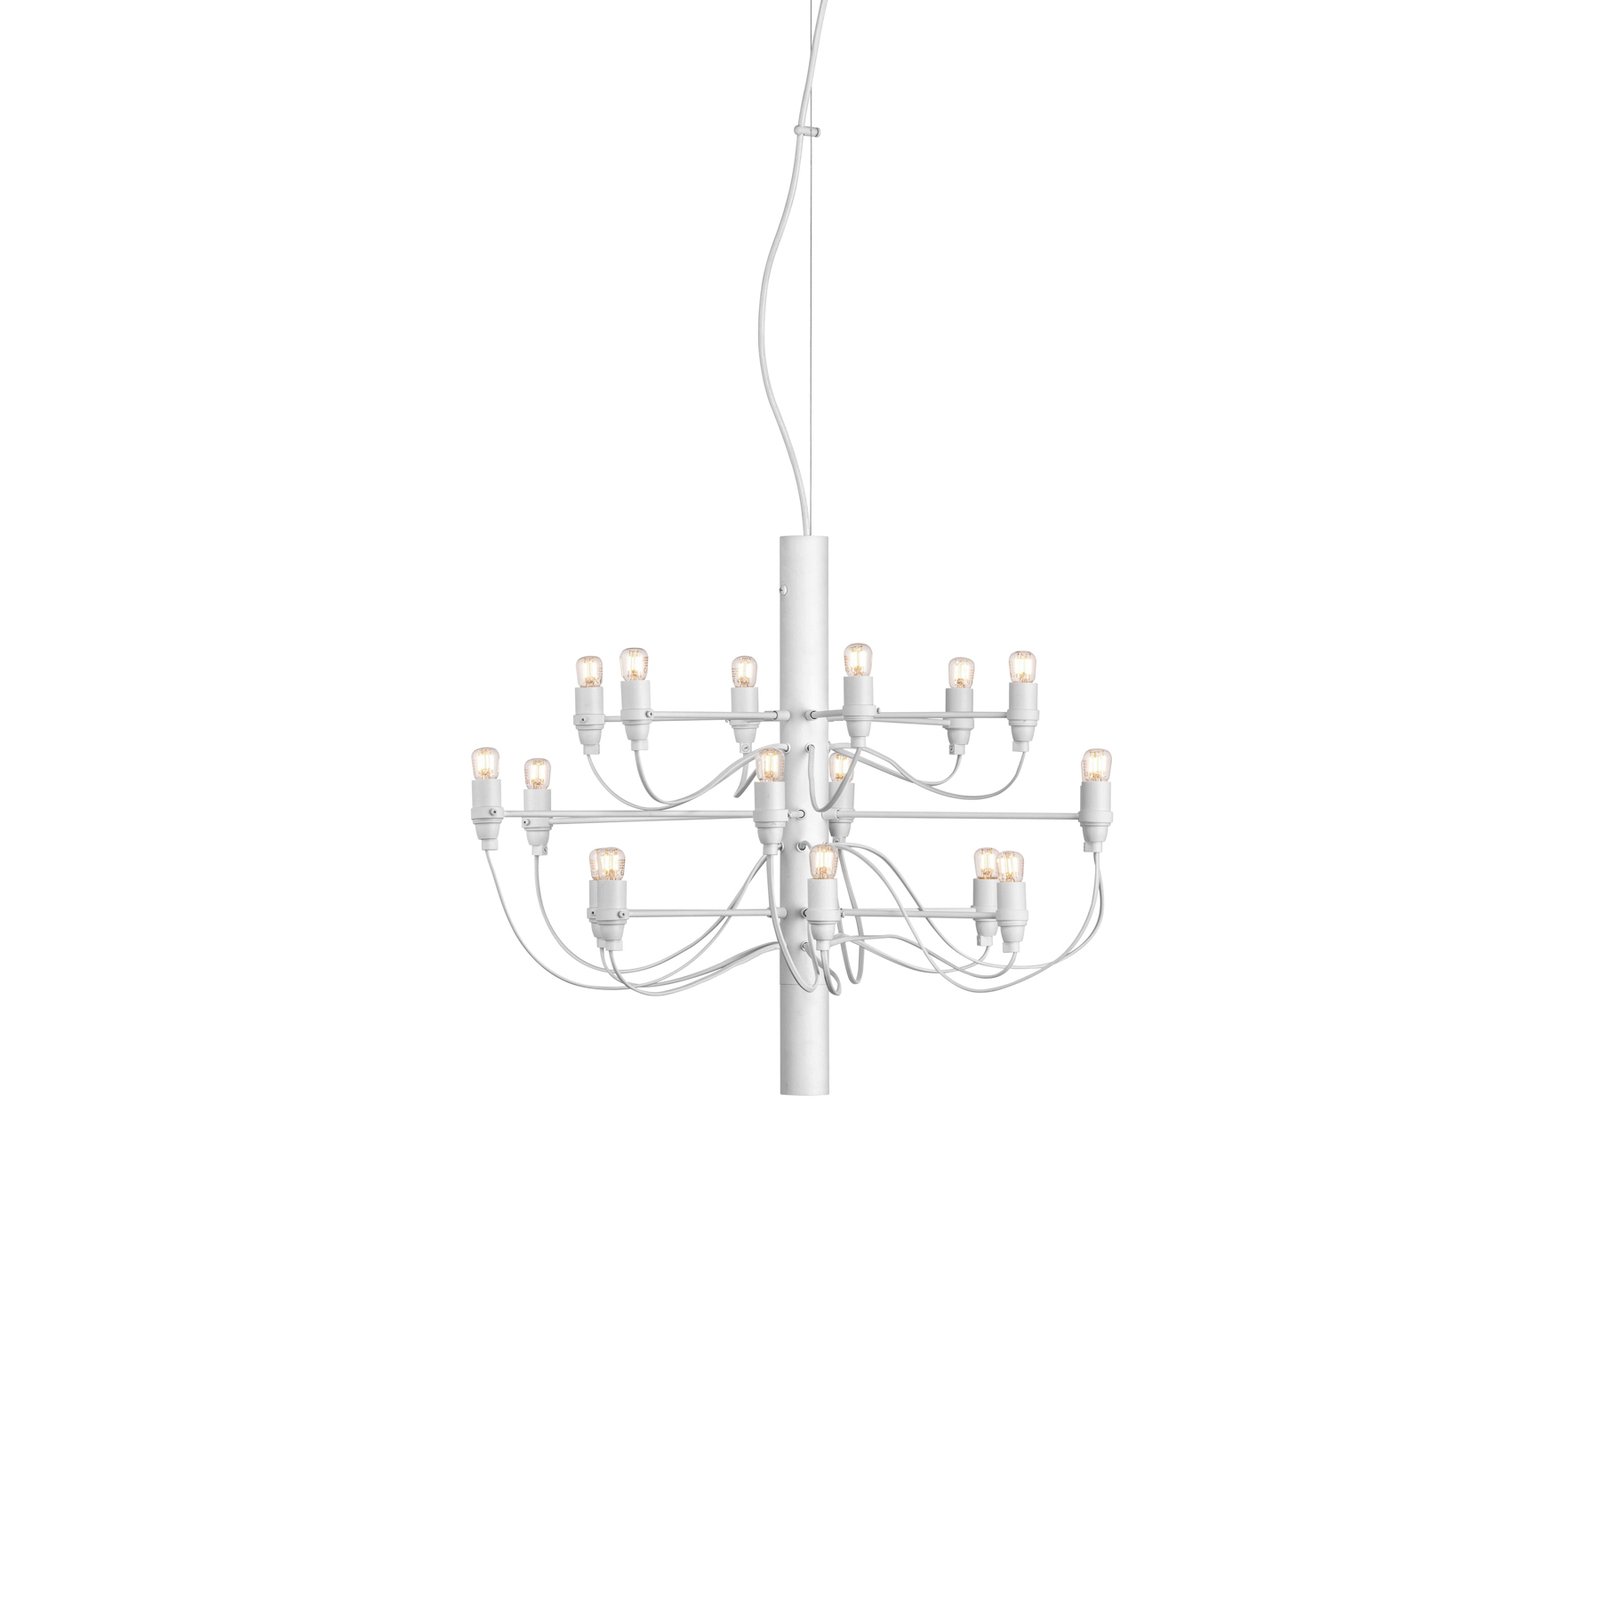 FLOS 2097/18 LED chandelier, clear bulbs, white